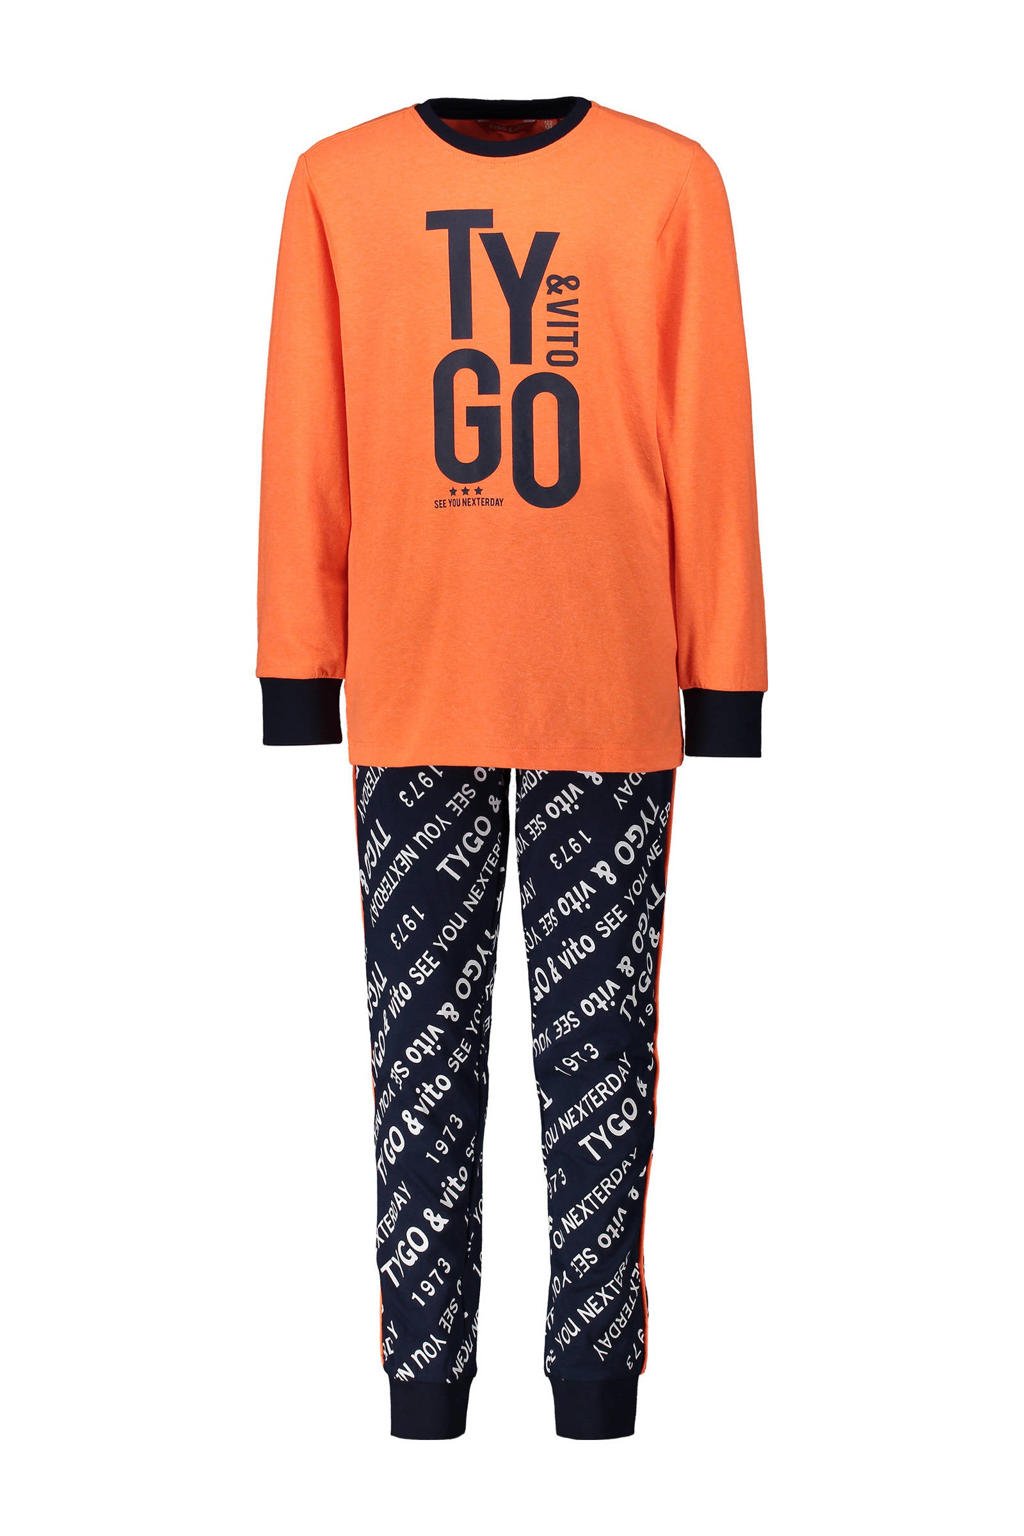 TYGO & vito   pyjama printopdruk oranje/zwart